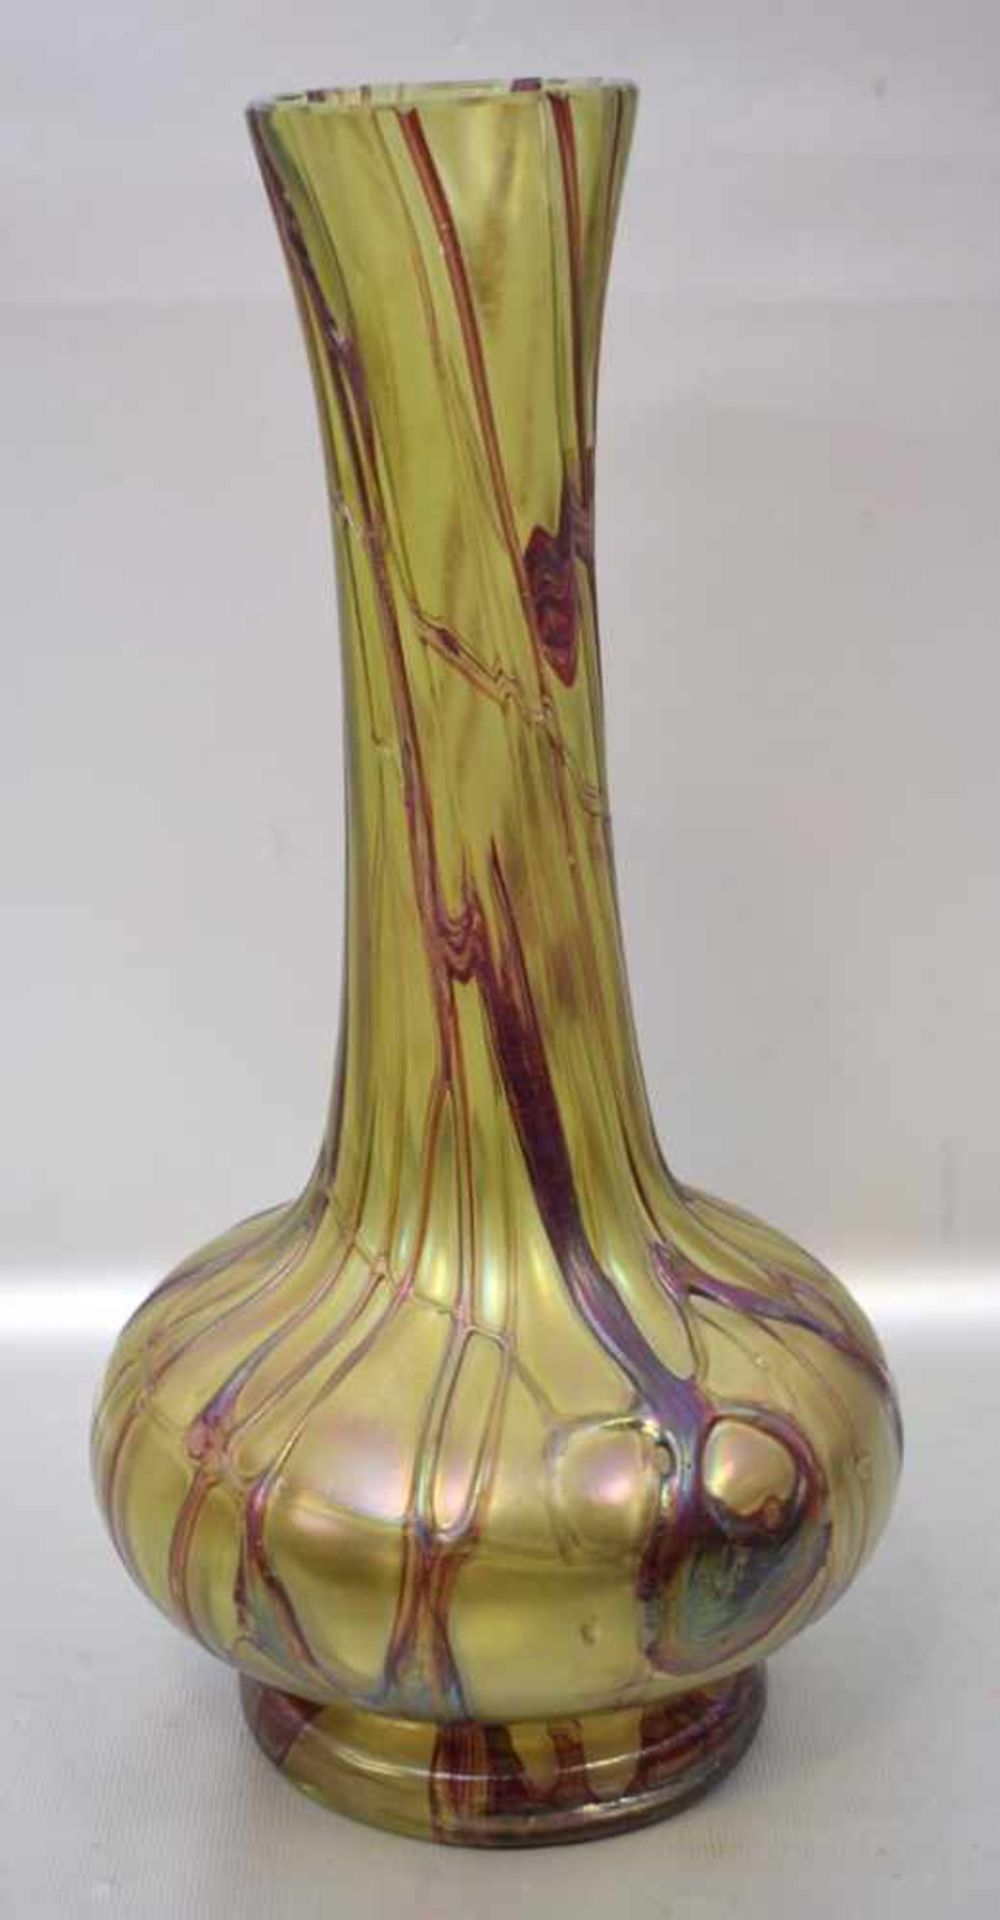 Jugendstil-Vasegrünes Glas, mit rotem Farbverlauf, runder Fuß, leicht gebaucht, H 30 cm, FM Palme